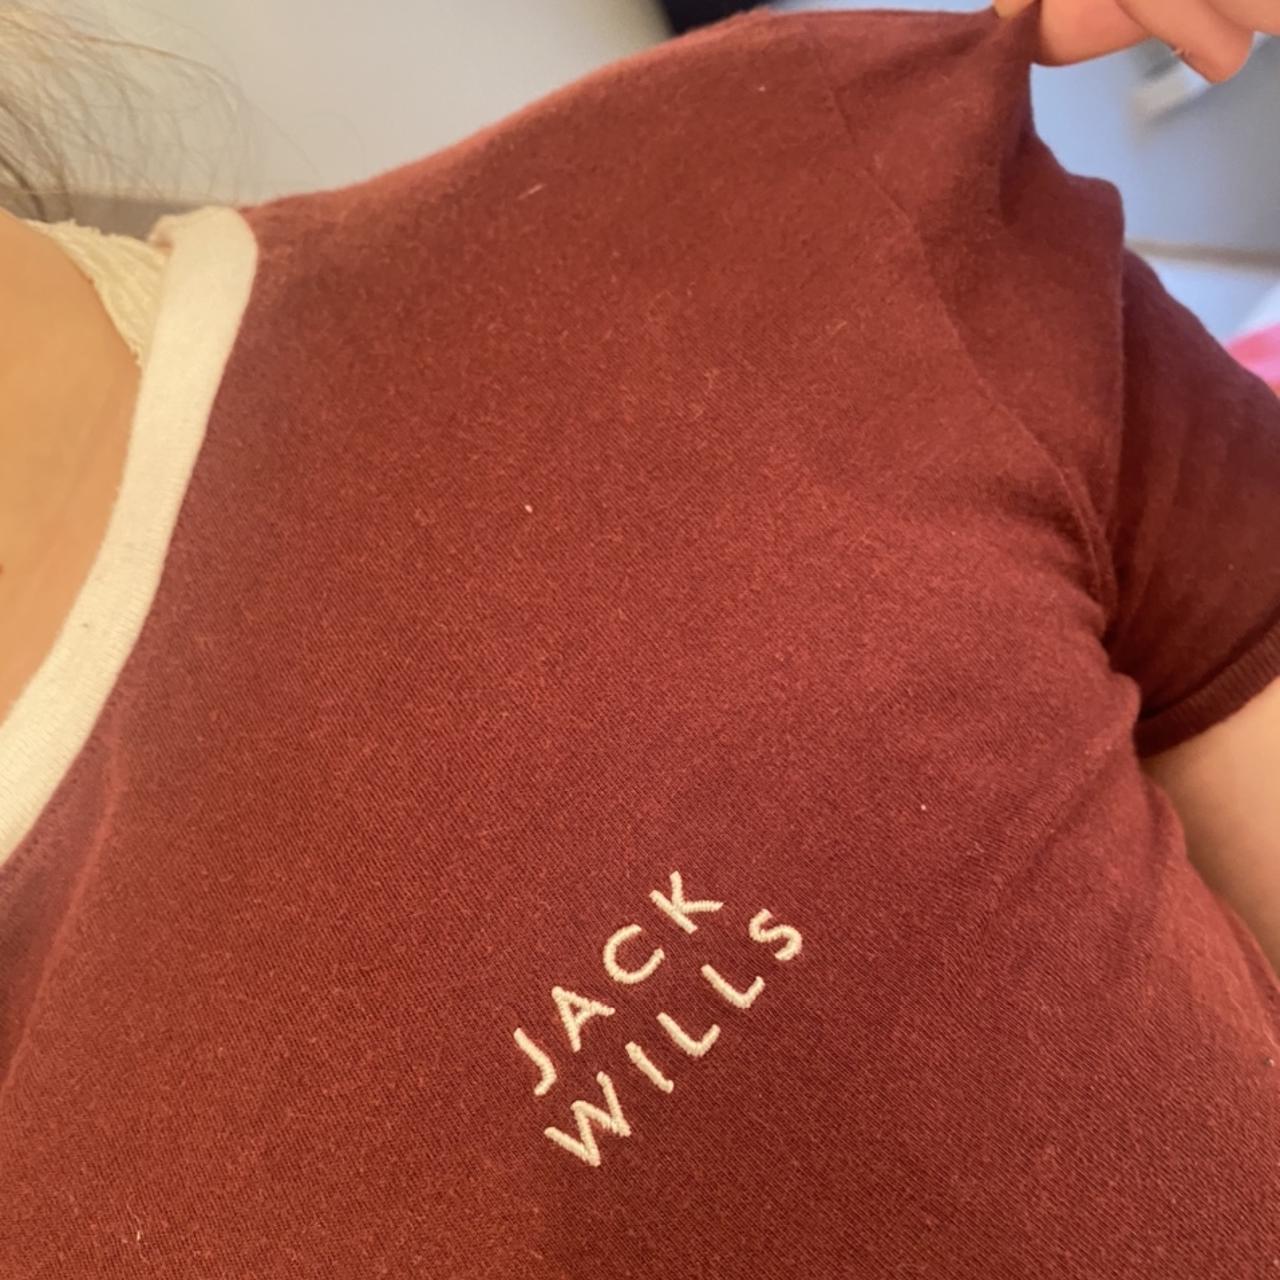 Jack Wills Women's Burgundy and Red T-shirt (2)